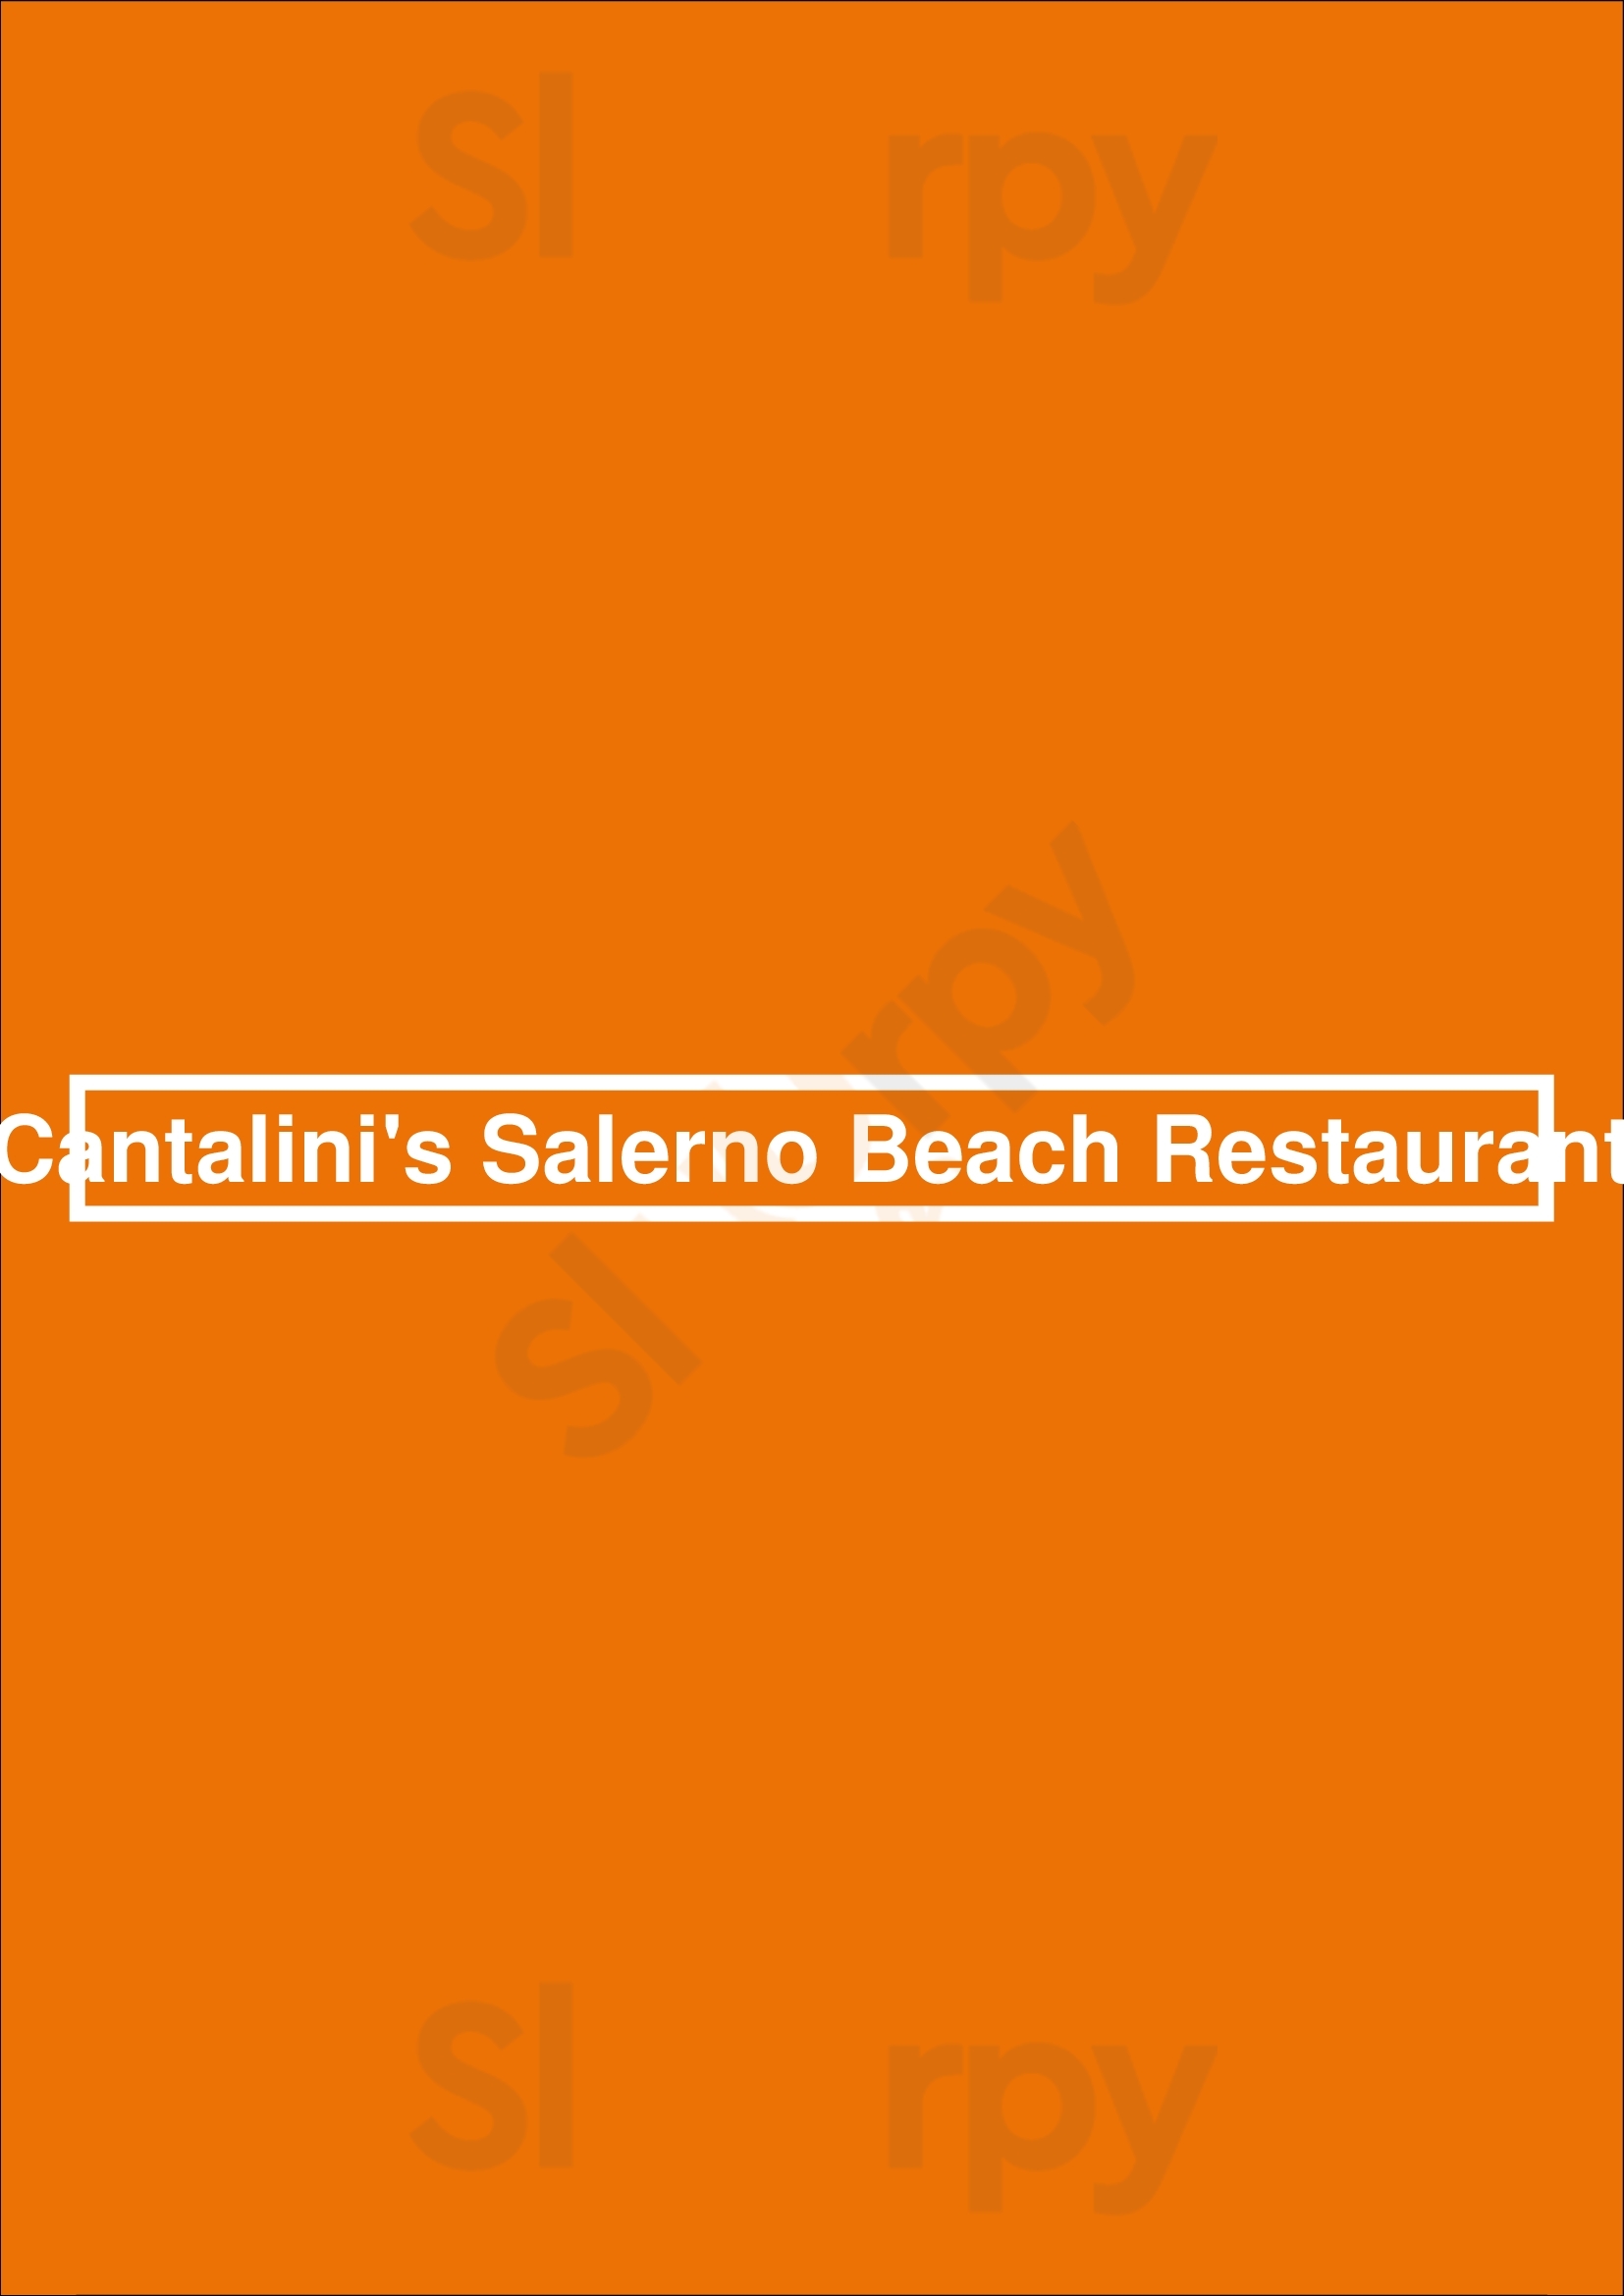 Cantalinis Salerno Beach Restaurant Los Angeles Menu - 1